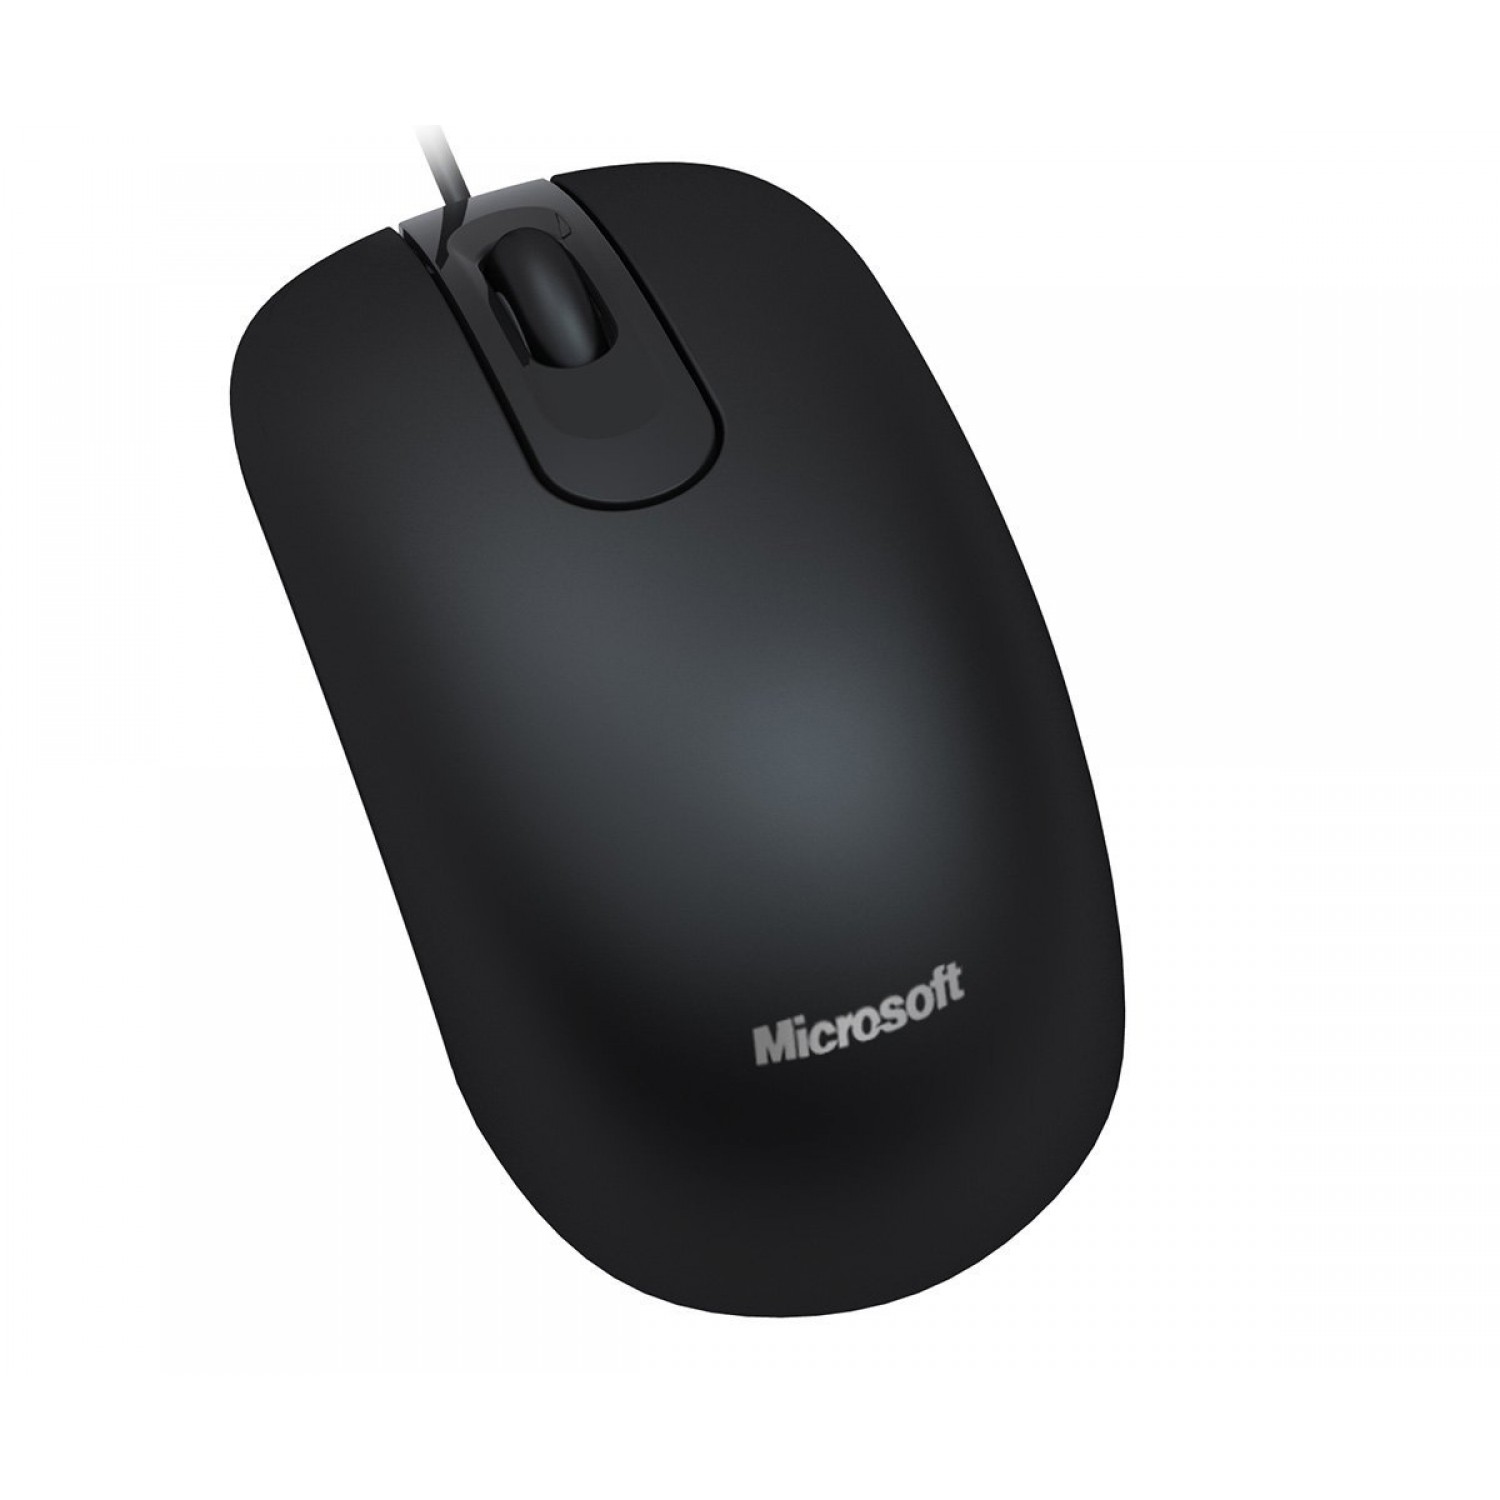  Microsoft Compact Optical 200 Oem Mouse